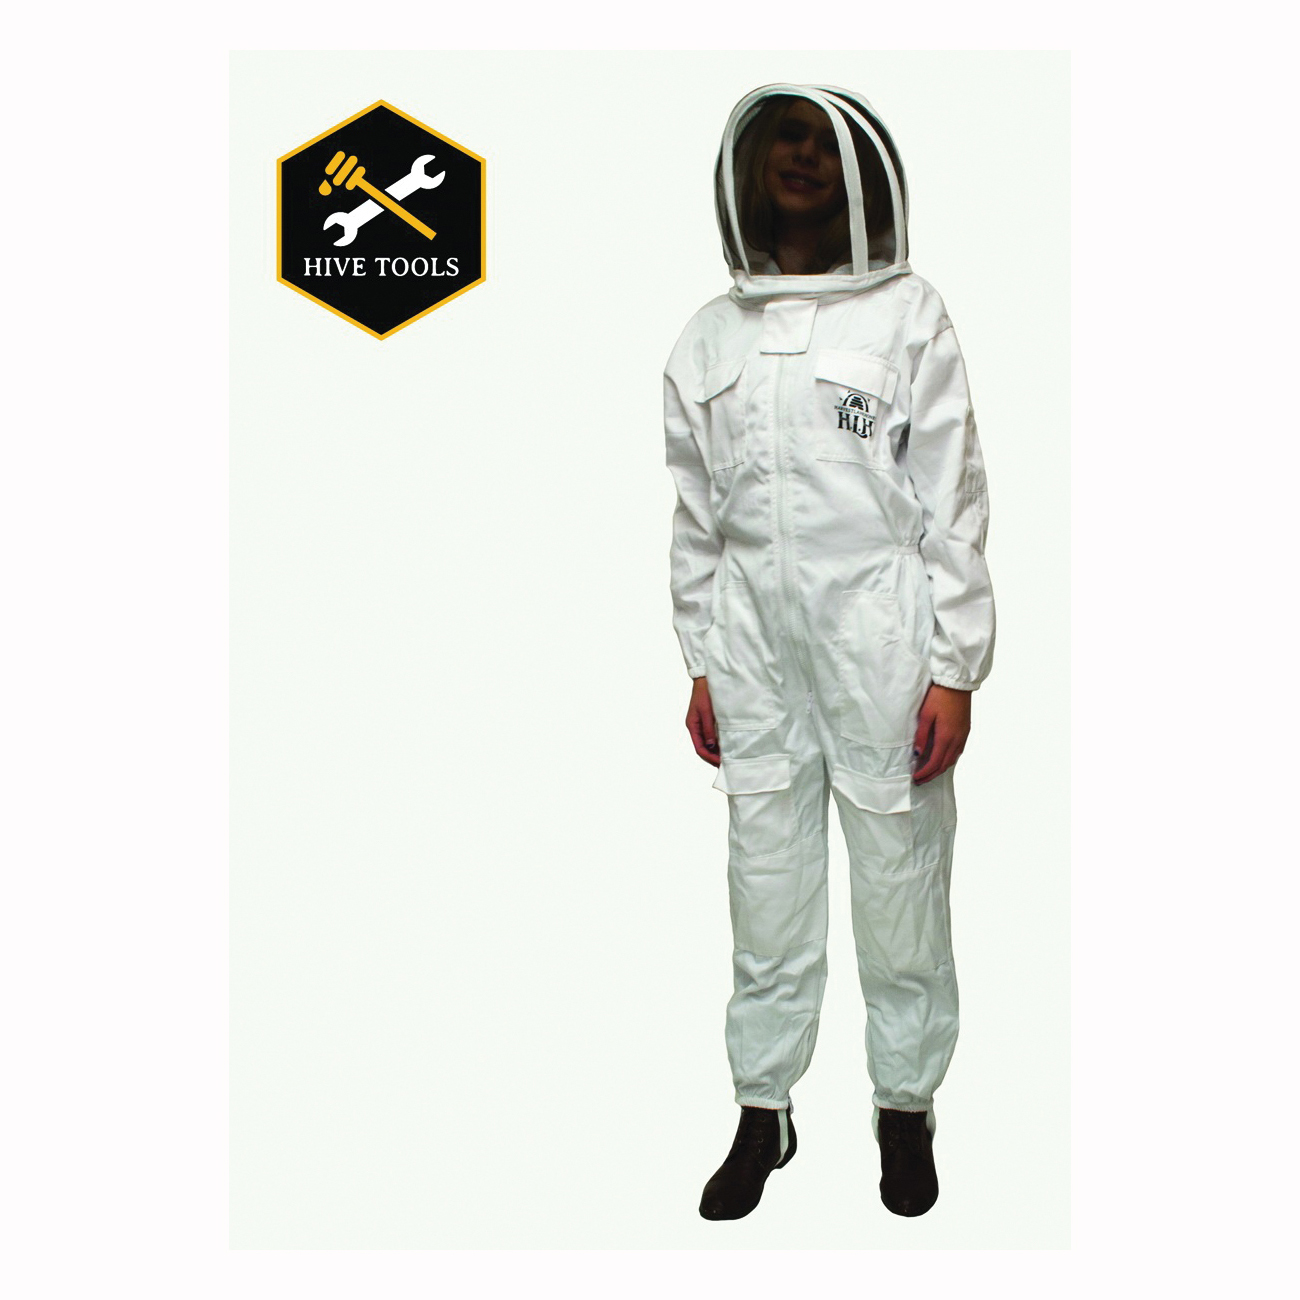 CLOTHSXXL-101 Beekeeping Suit, 2XL, Zipper Closure, Polycotton